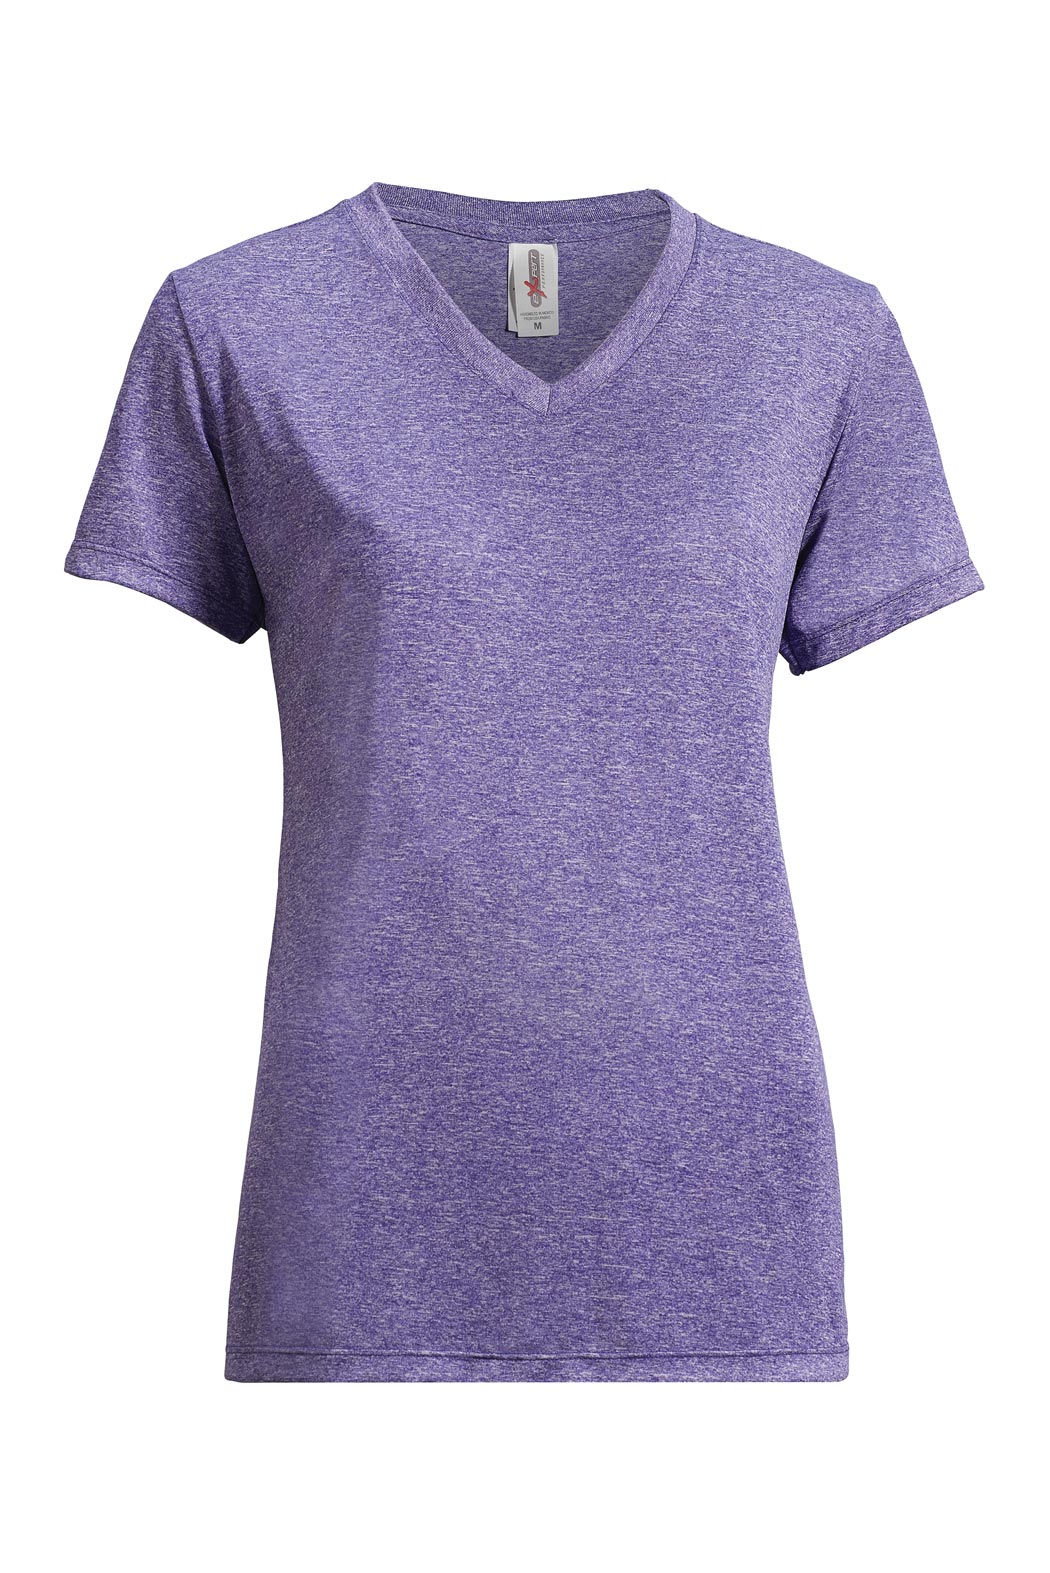 Expert Brand Retail Women's Heather Active Tee Purple#color_heather-purple